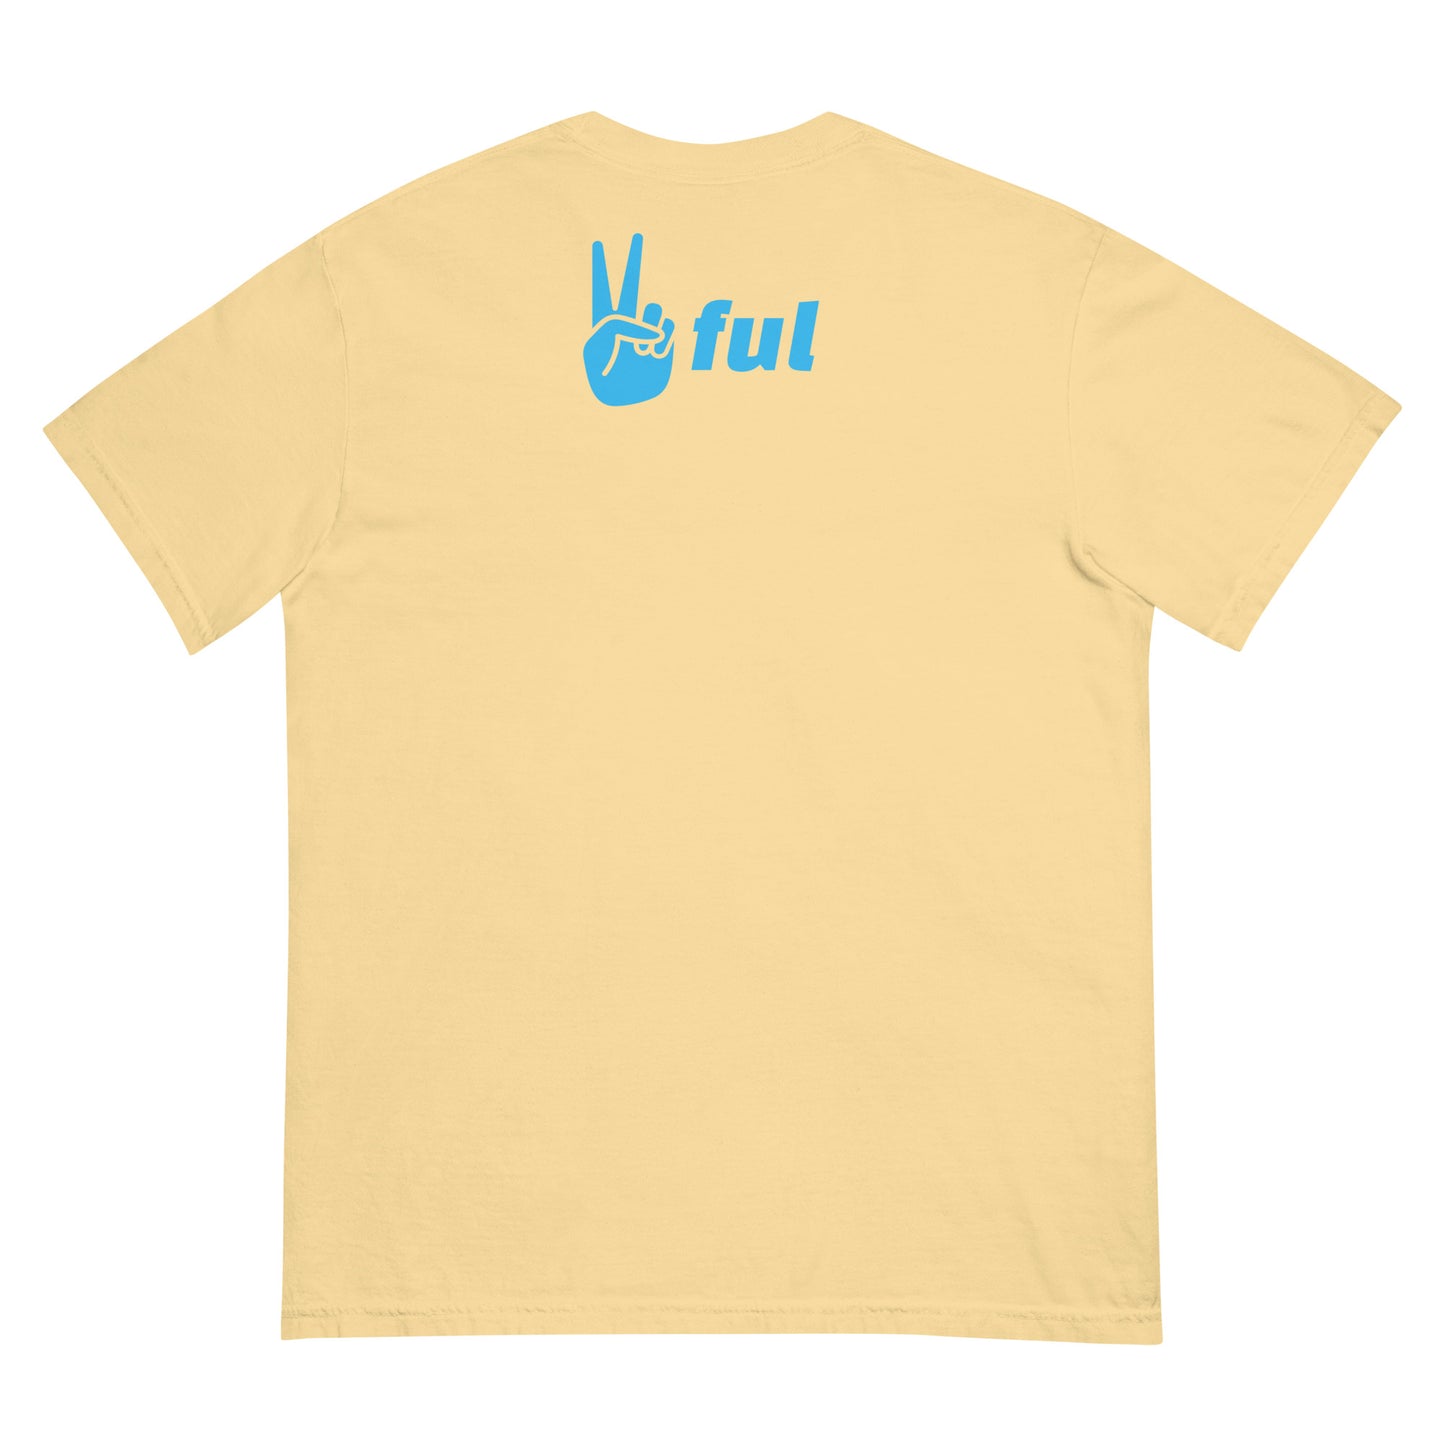 Unisex "Just Chillin'" Peaceful garment-dyed heavyweight t-shirt